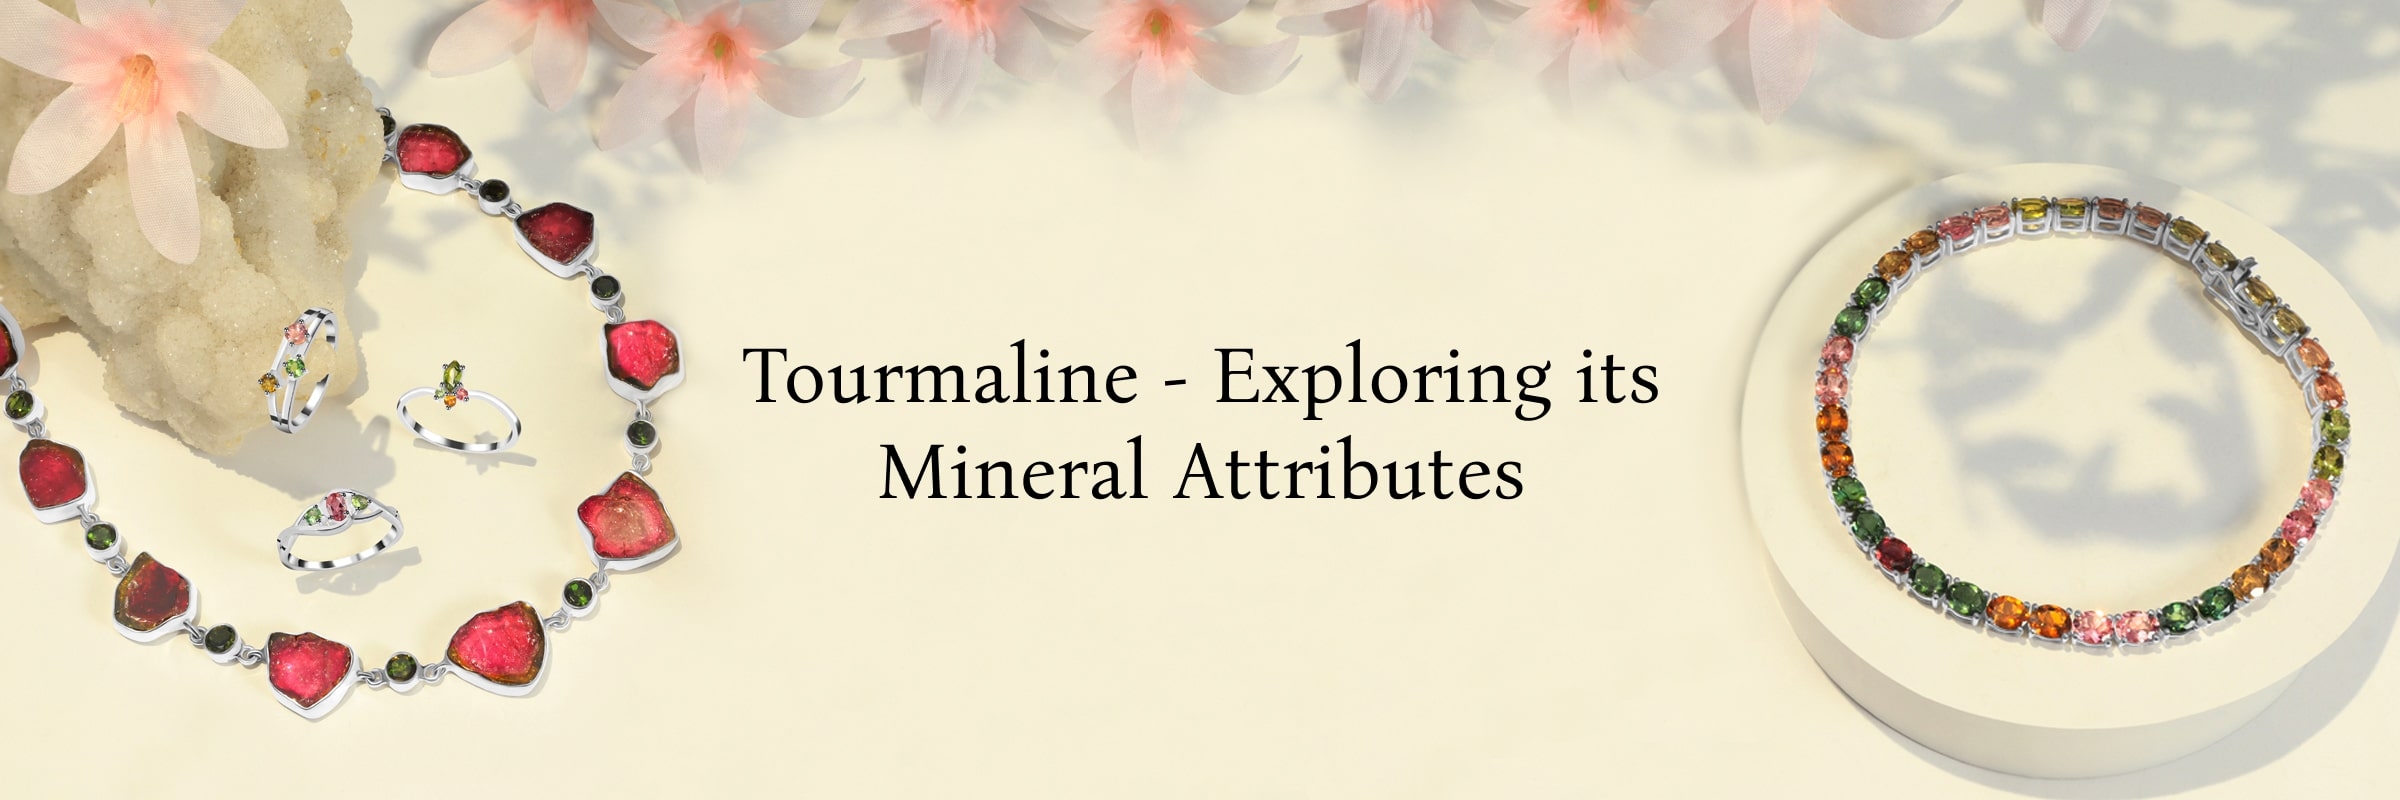 Mineral Characteristics of Tourmaline